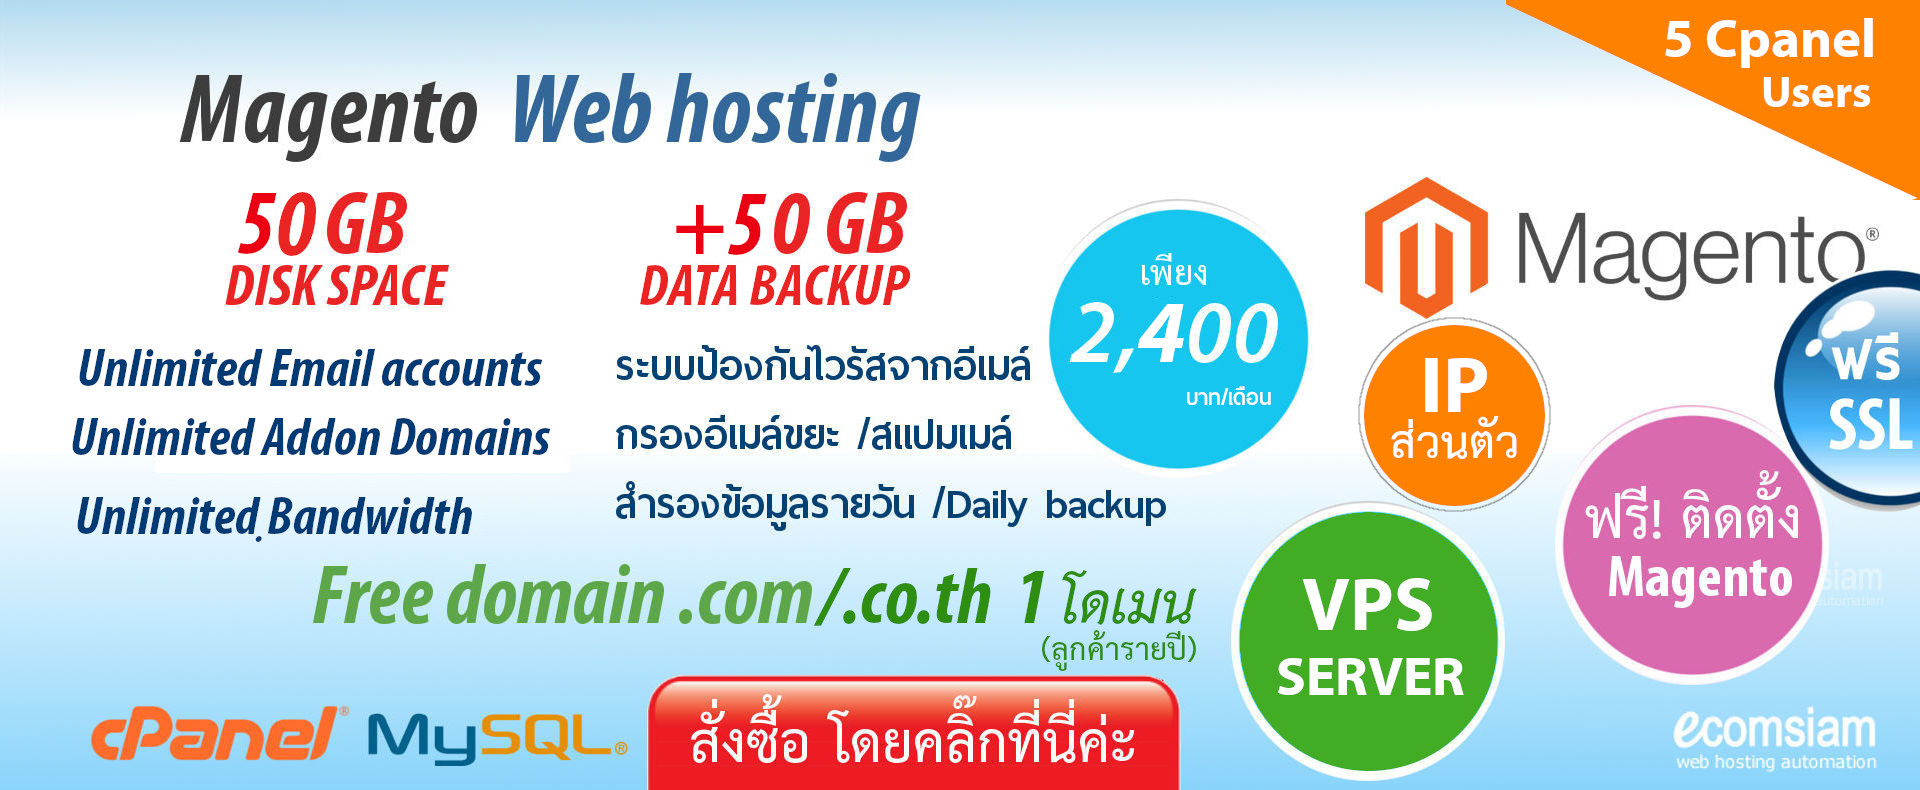 magento hosting plan thai เว็บโฮสติ้งไทย ฟรีโดเมน ฟรี SSL สำหรับองค์กร ที่ต้องการใช้งานเว็บไซต์และฐานข้อมูล เริ่มต้นเพียง 2,200 บาทต่อปี